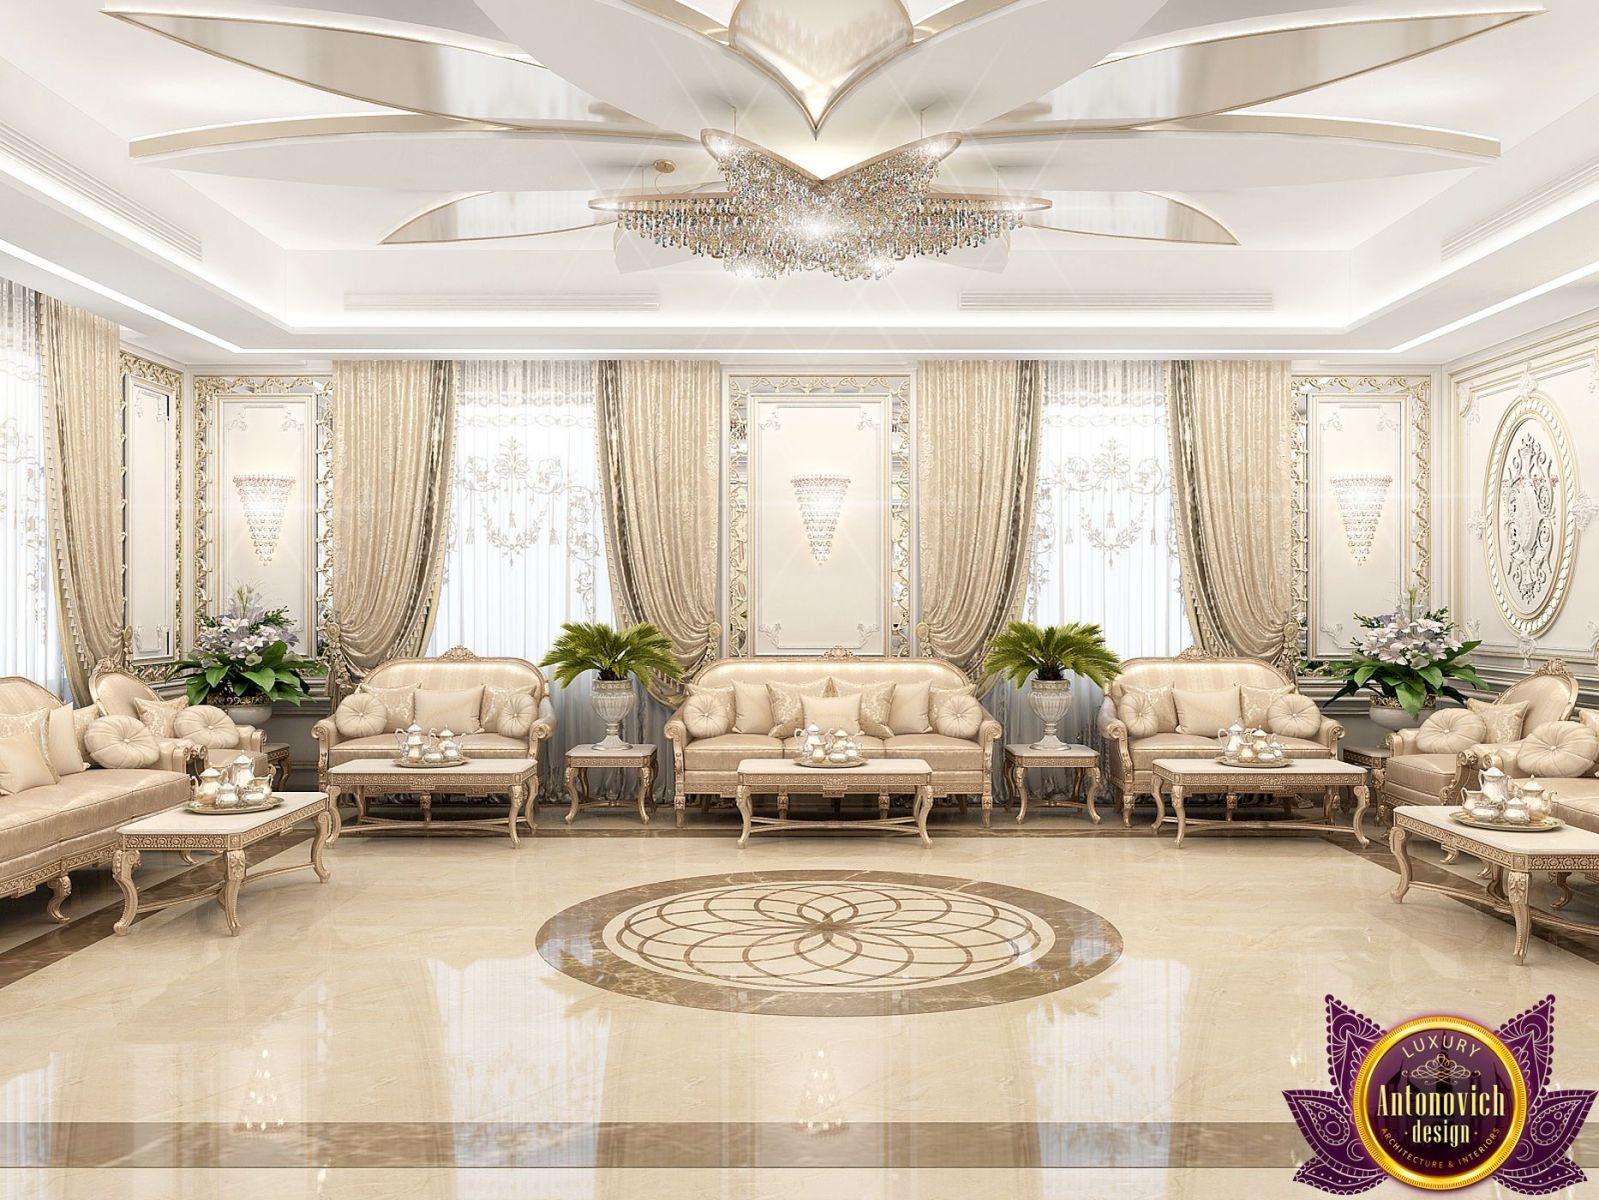 Elegant Majlis interior with plush seating and intricate design